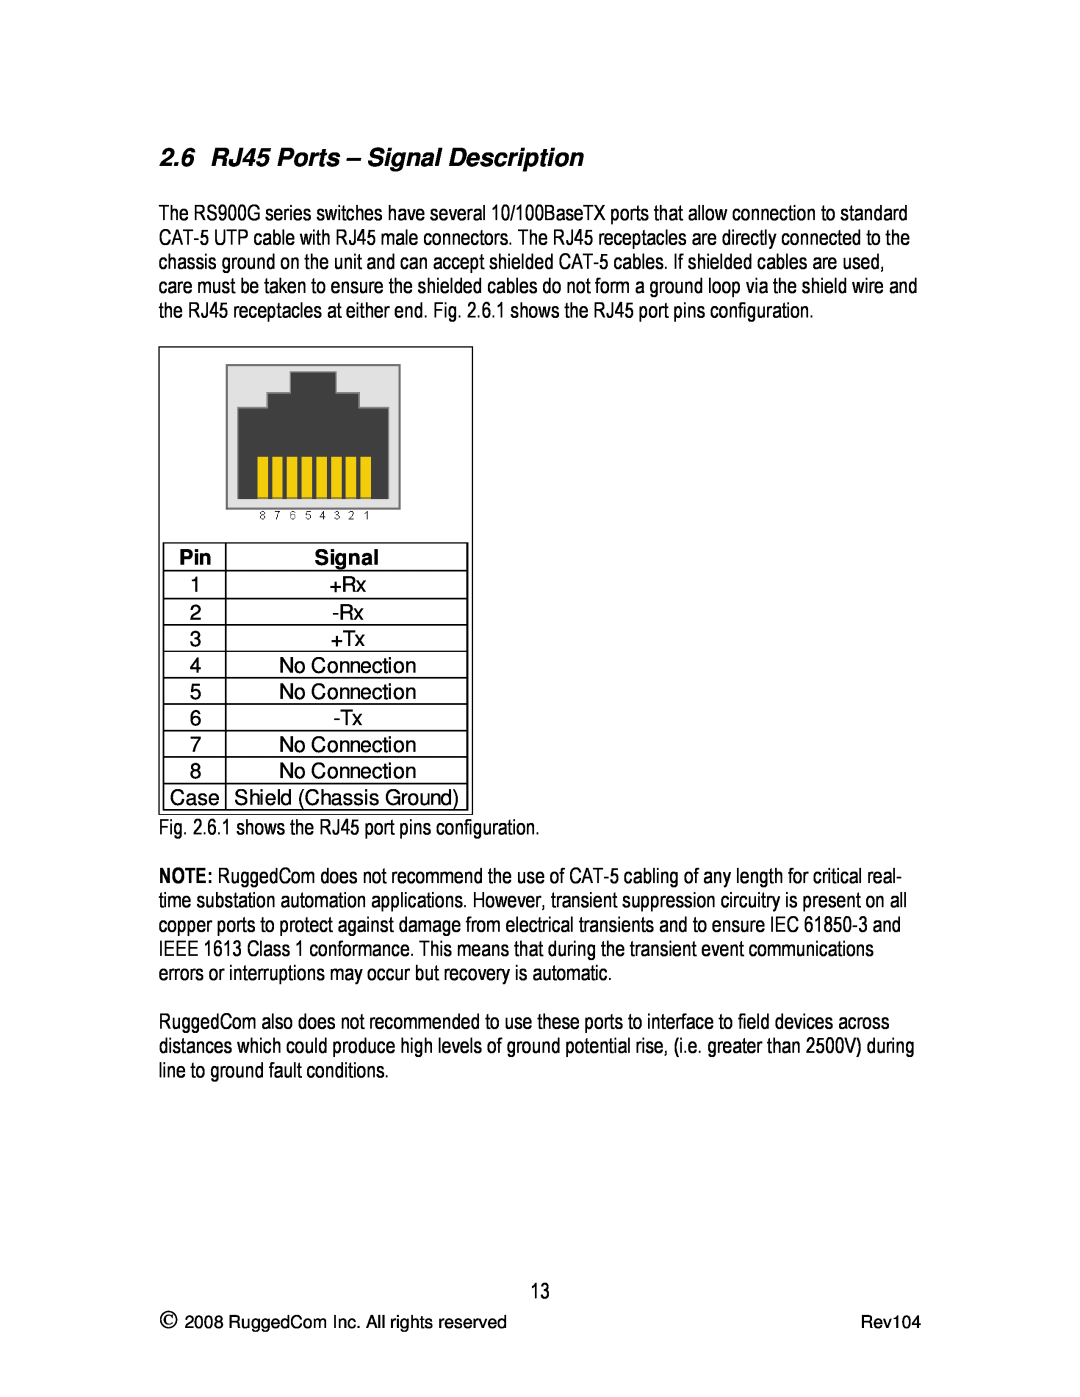 RuggedCom RS900G manual 2.6 RJ45 Ports - Signal Description 